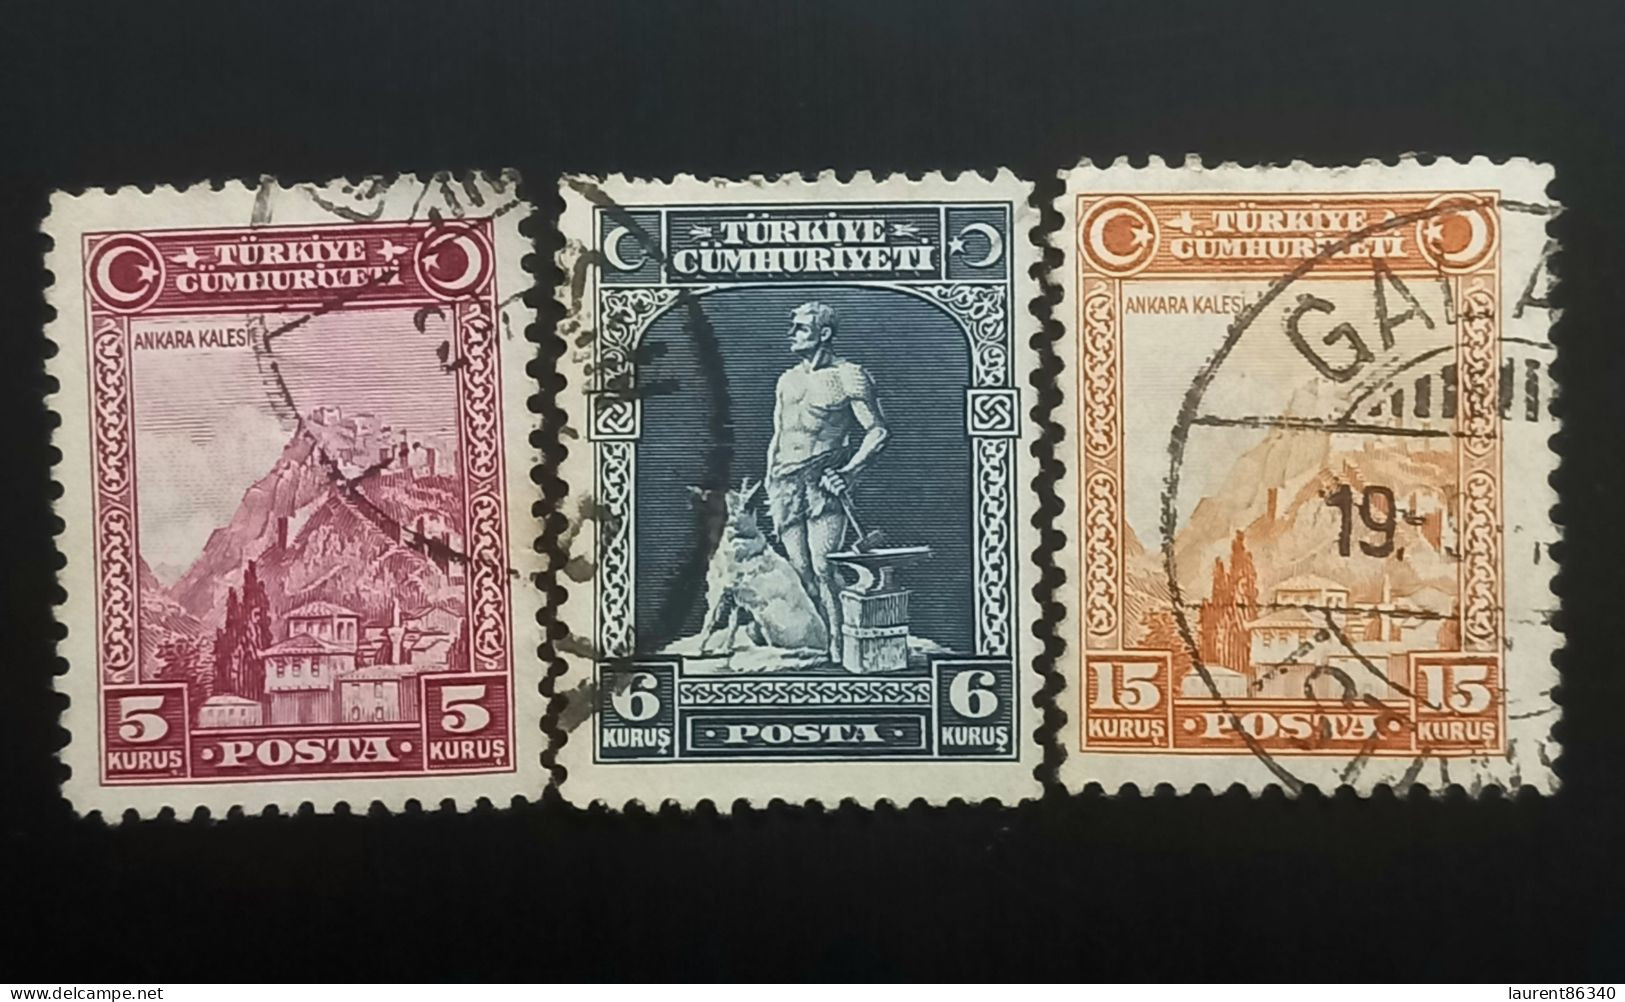 TURQUIE 1930 Inscription "TÜRKIYE CÜMHURIYETI" - "Ü" In "CÜMHURIYETI" 3 Used Stamps - Usados